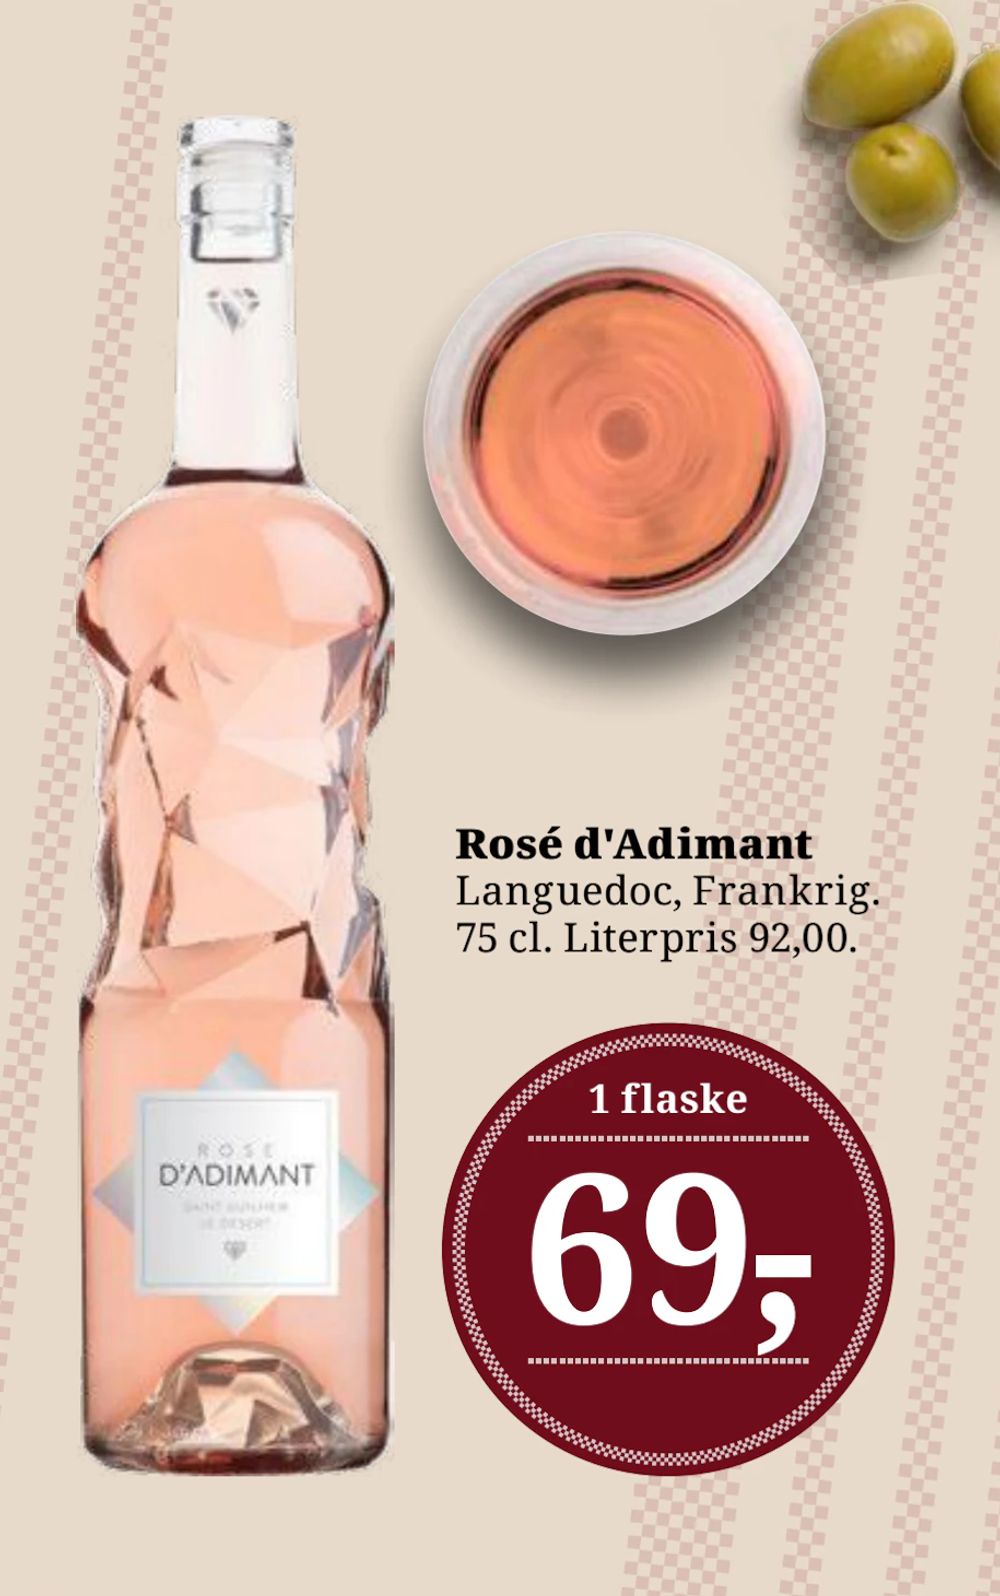 Tilbud på Rosé d'Adimant fra Dagli'Brugsen til 69 kr.